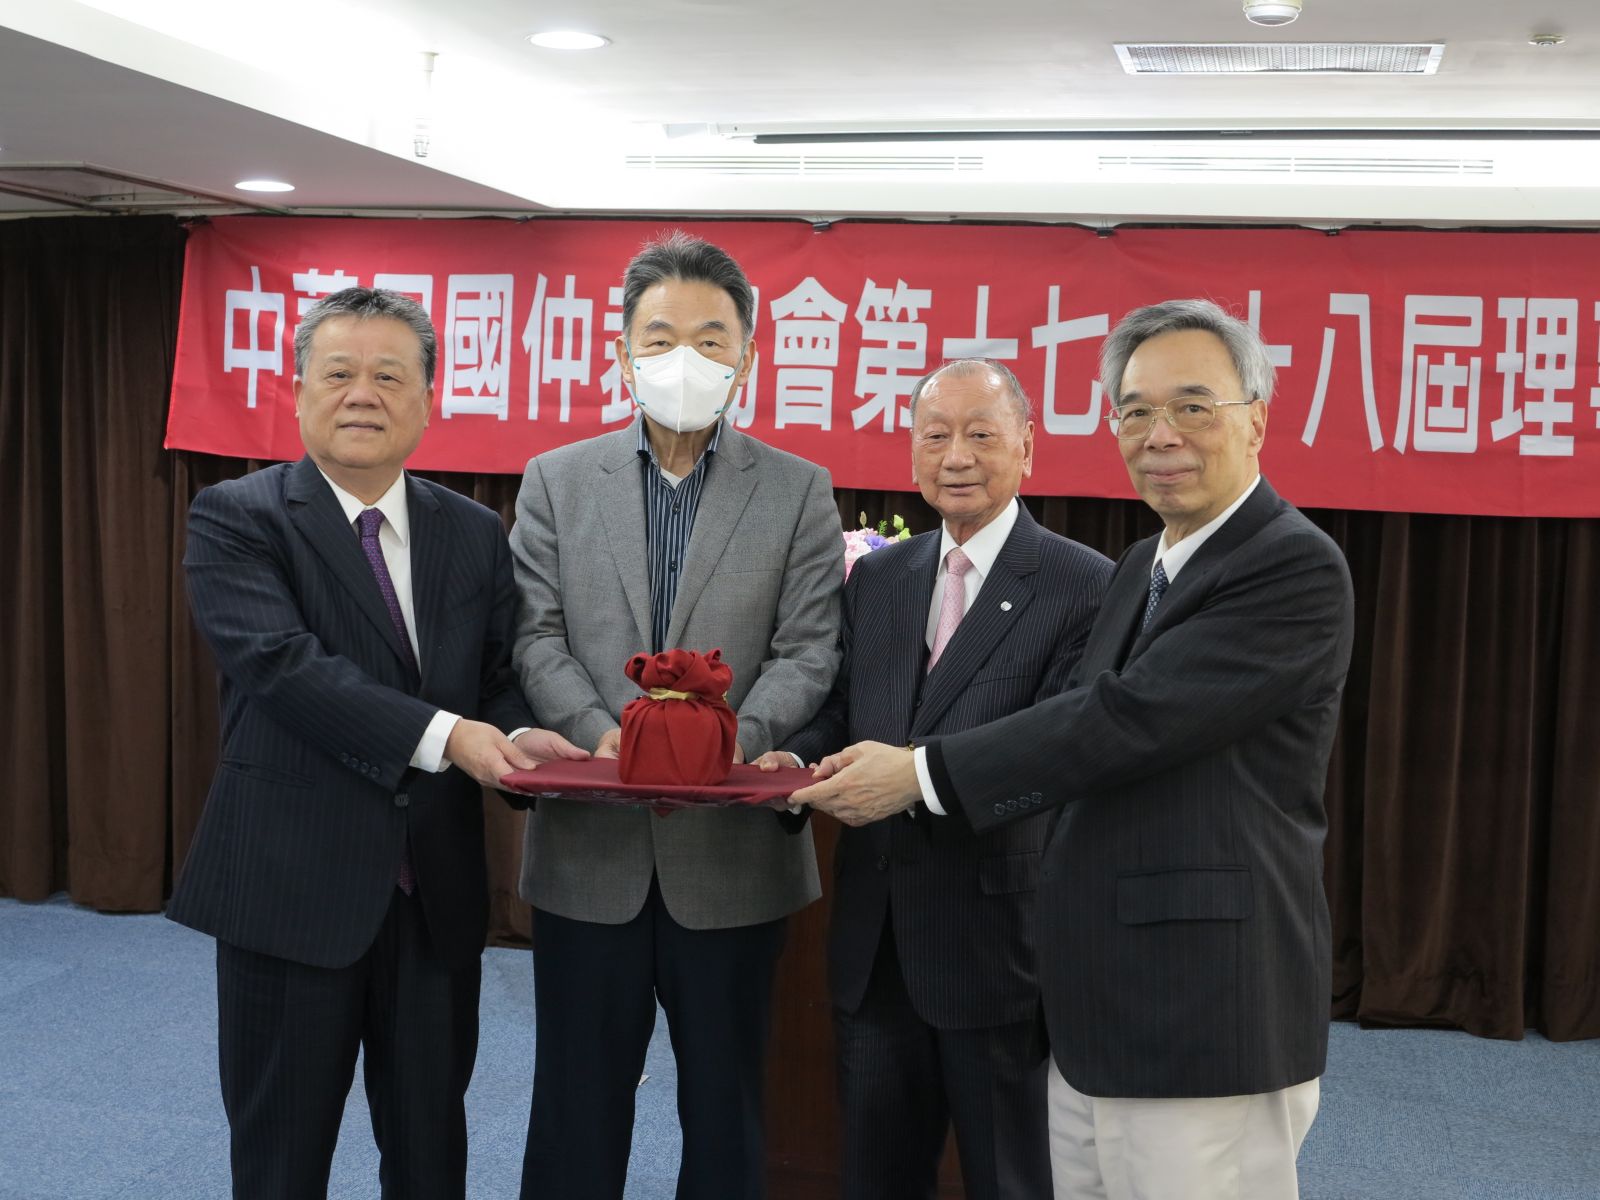 本會理事長由李復甸博士交棒吳永乾博士<br>Dr. Fuldien Li hands over CAA Chairmanship to Dr. Joe Y. C. Wu